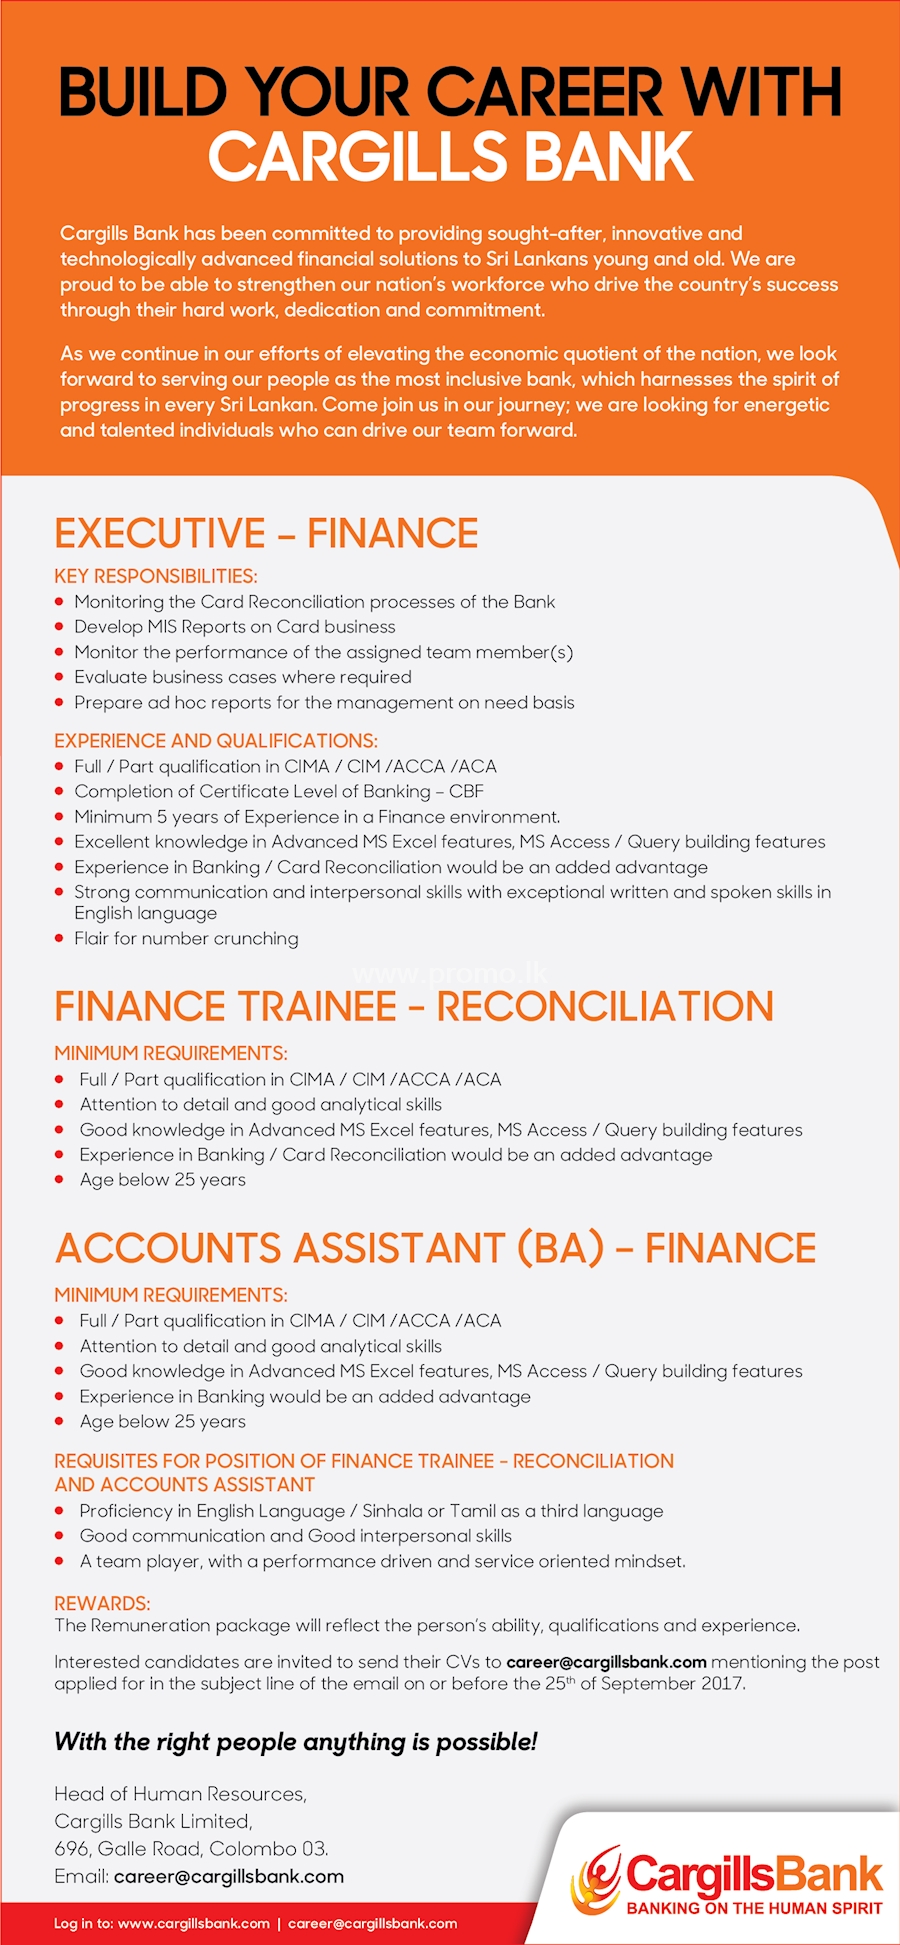 Executive-Finance & Finance Trainee & Accounts Assistant